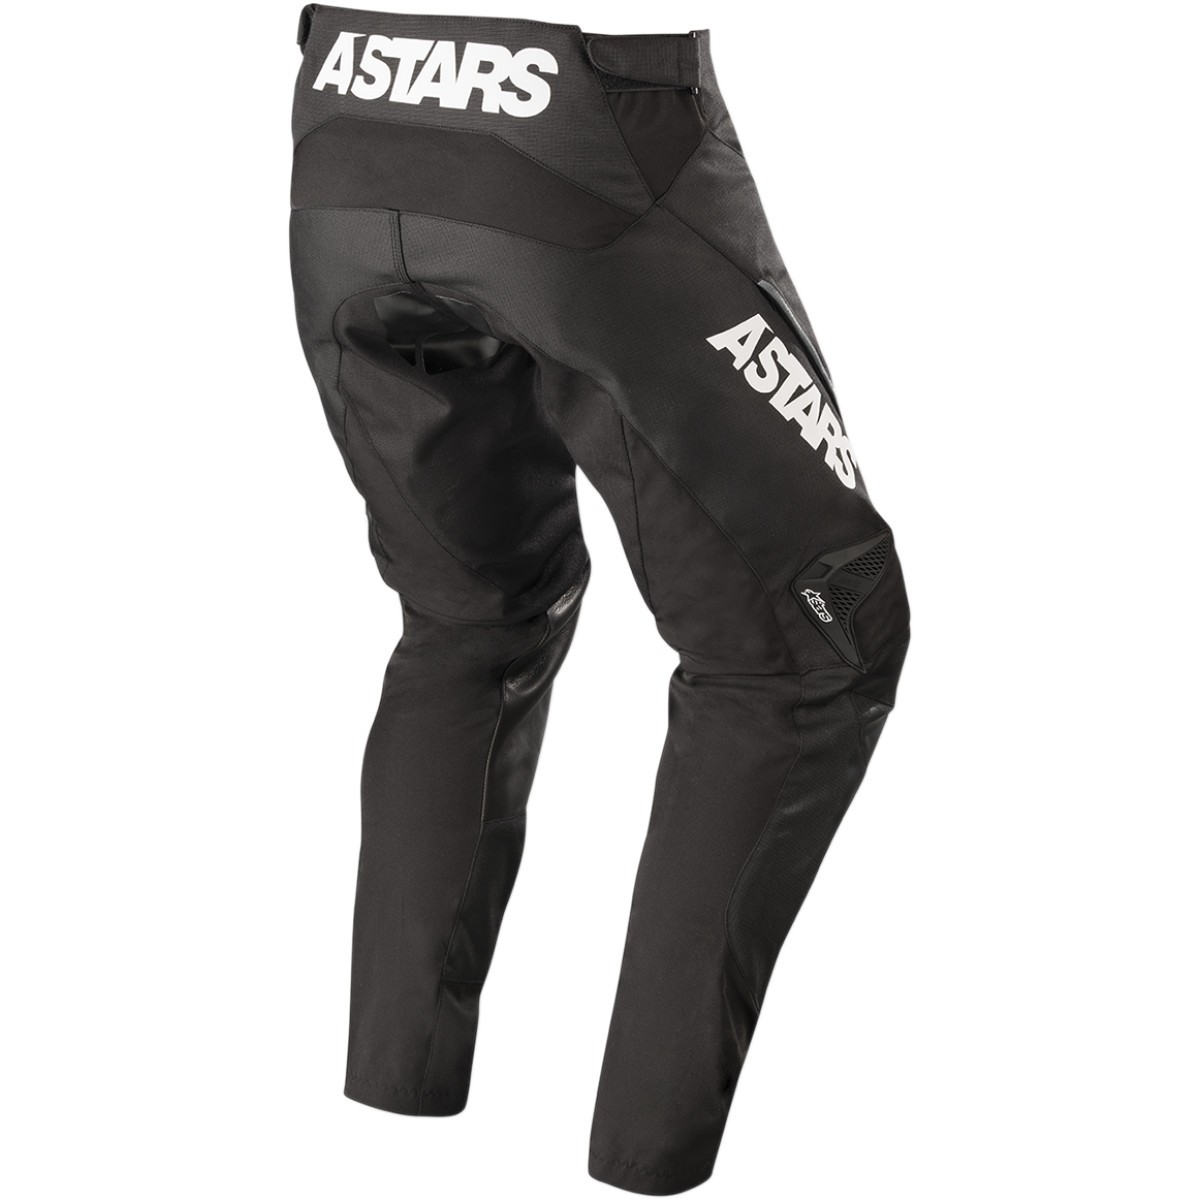 Pantalon Cross / Enduro ALPINESTARS VENTURE R PANTS Noir